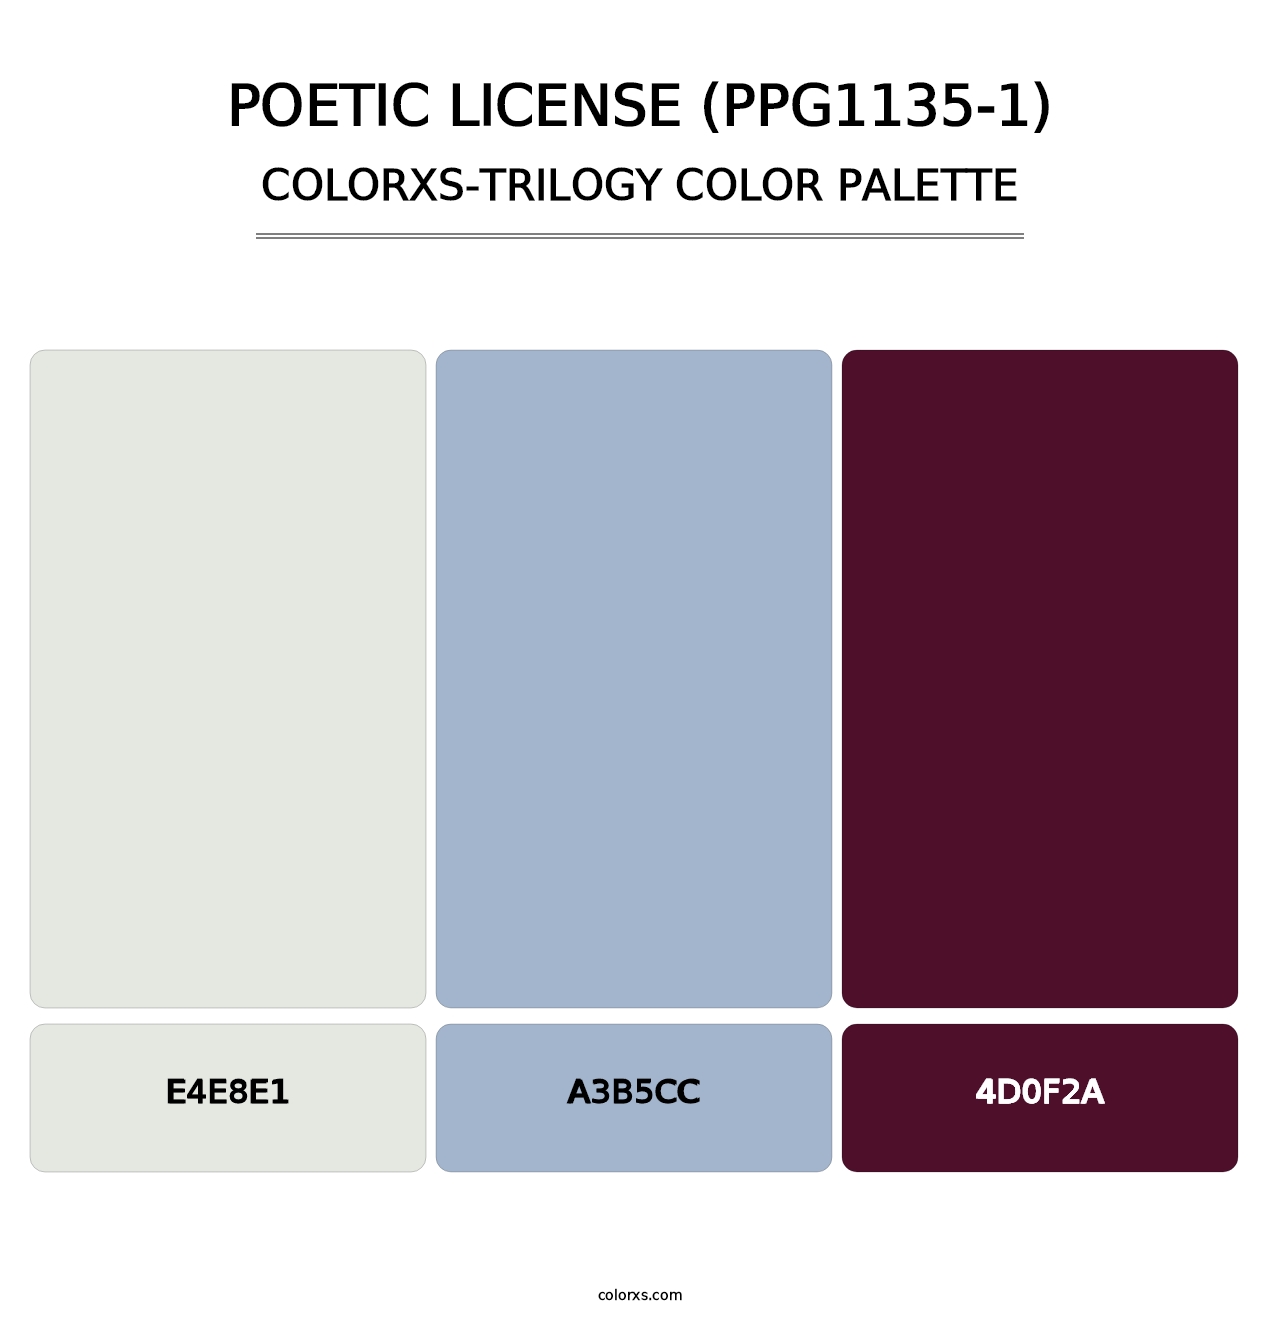 Poetic License (PPG1135-1) - Colorxs Trilogy Palette